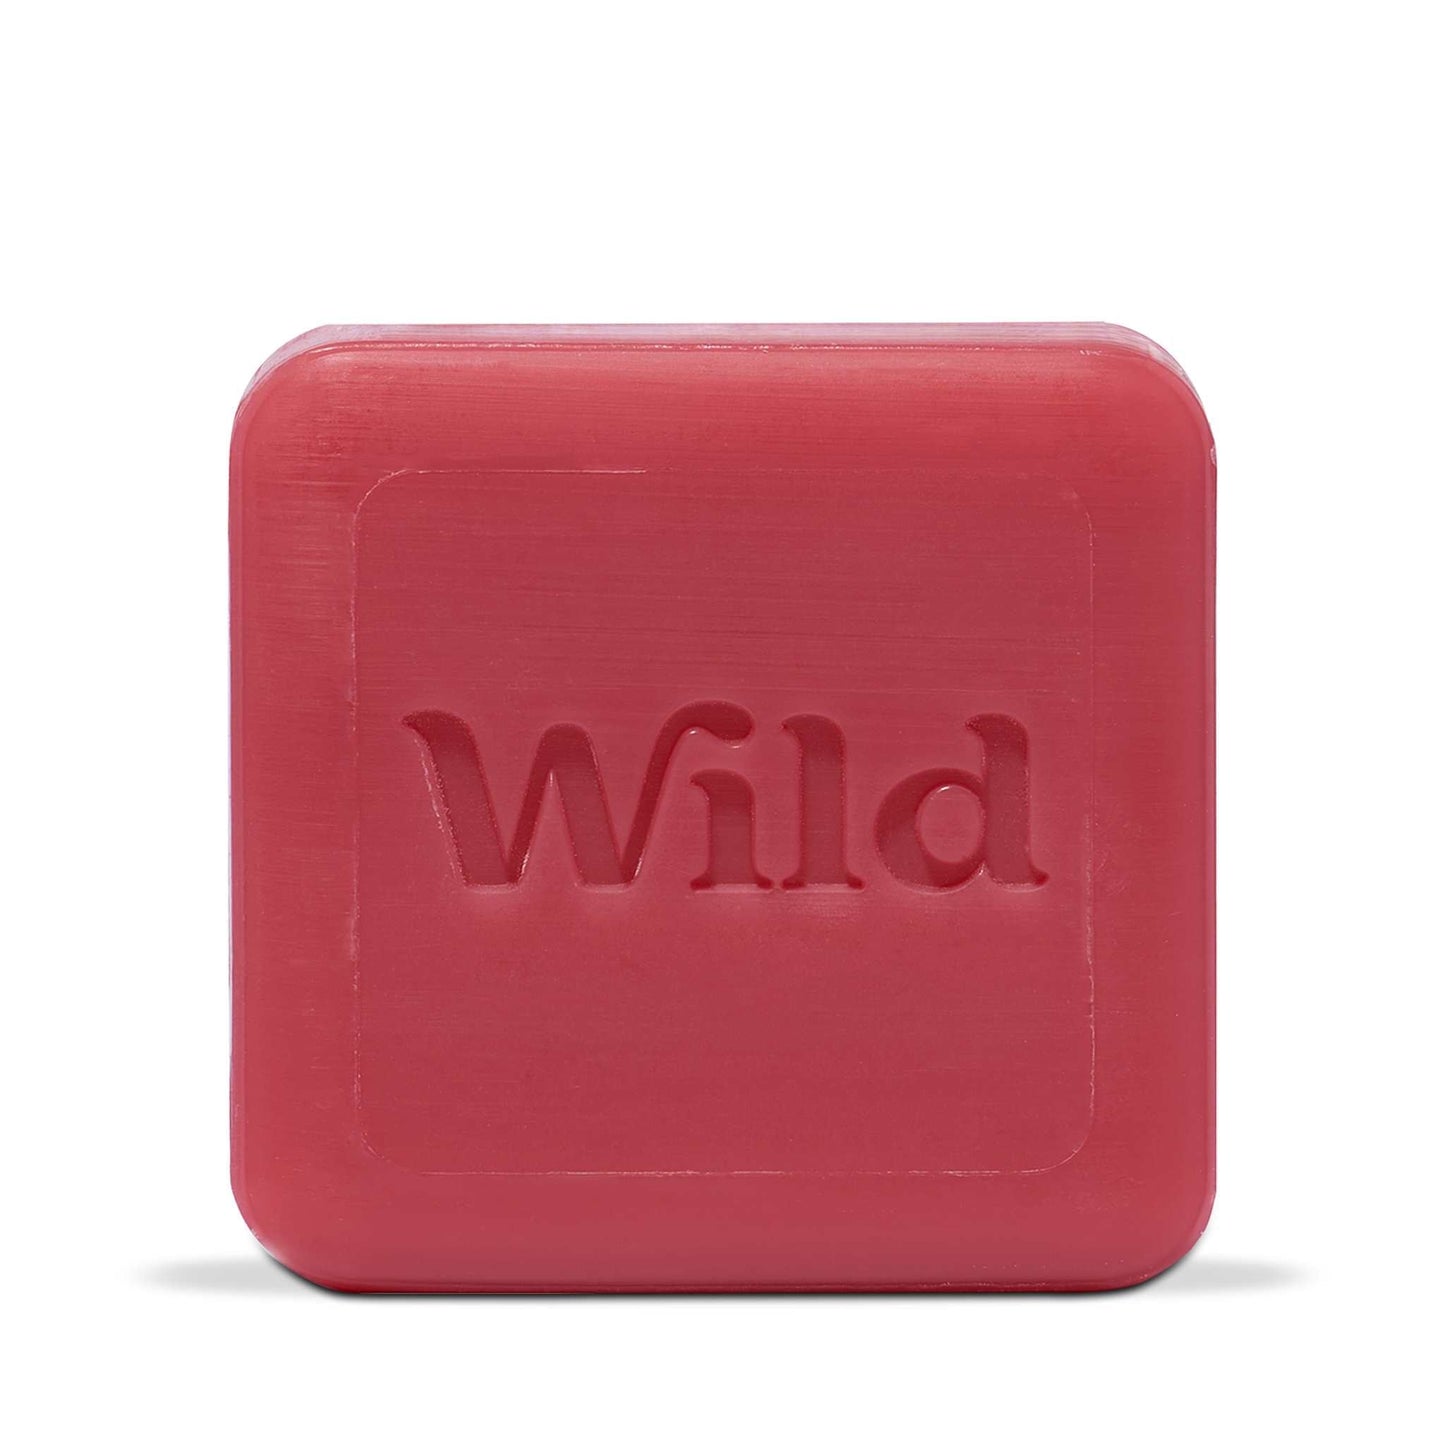 Wild Soap Wild Jasmine & Mandarin Blossom Soap Bar - 100g